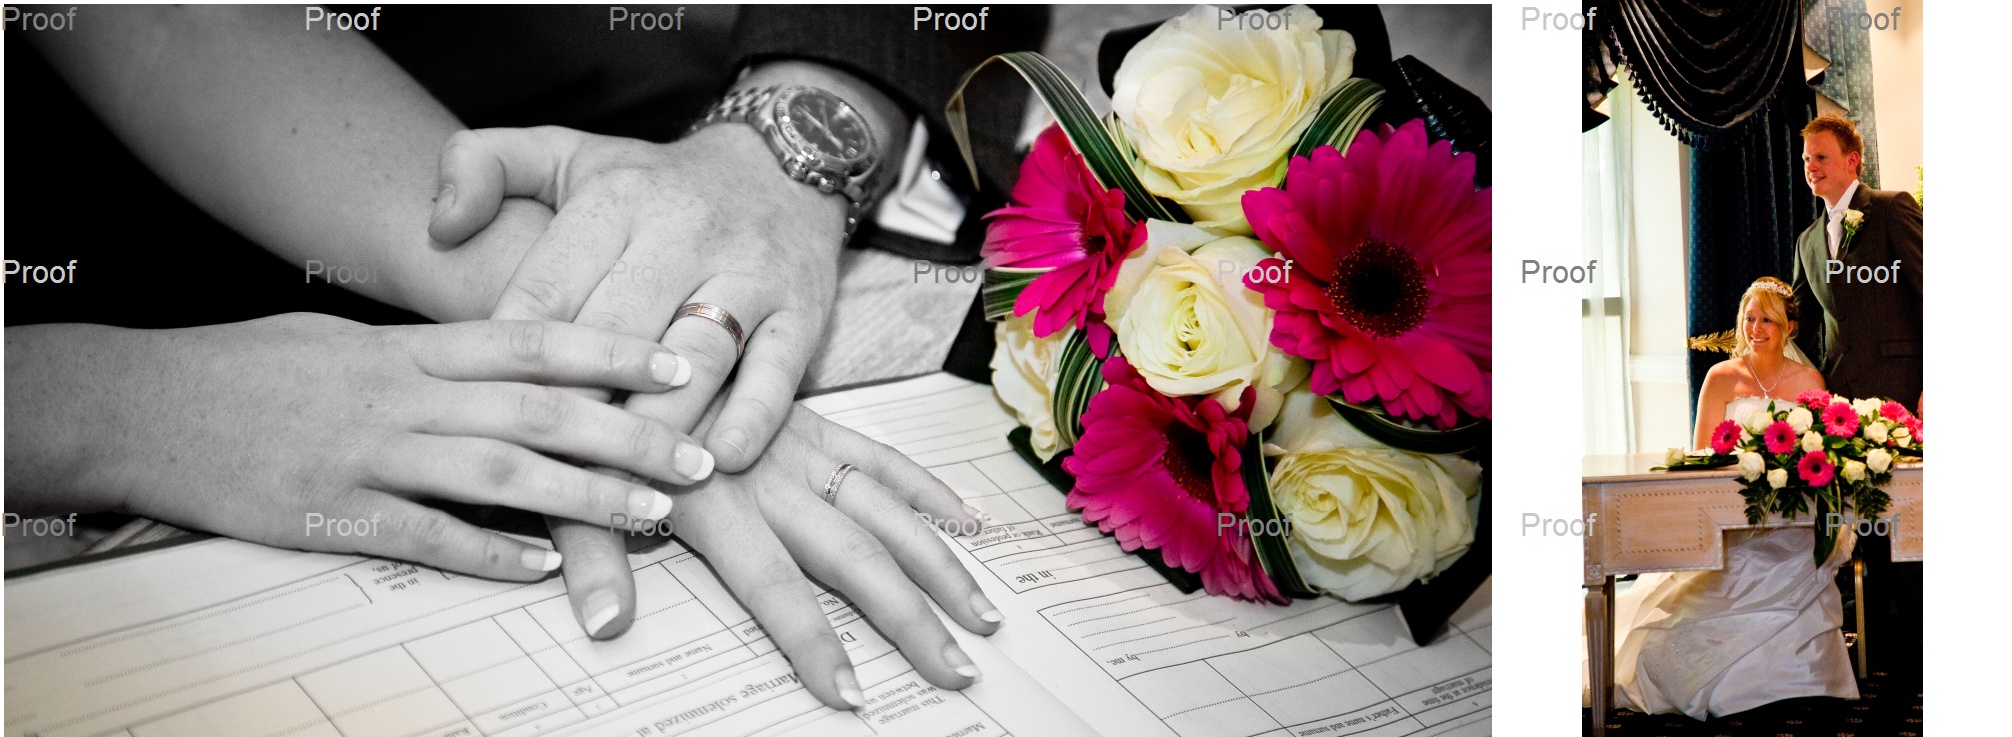 wedding bouquet with bride and groom’s hands in wedding storybook album pictures